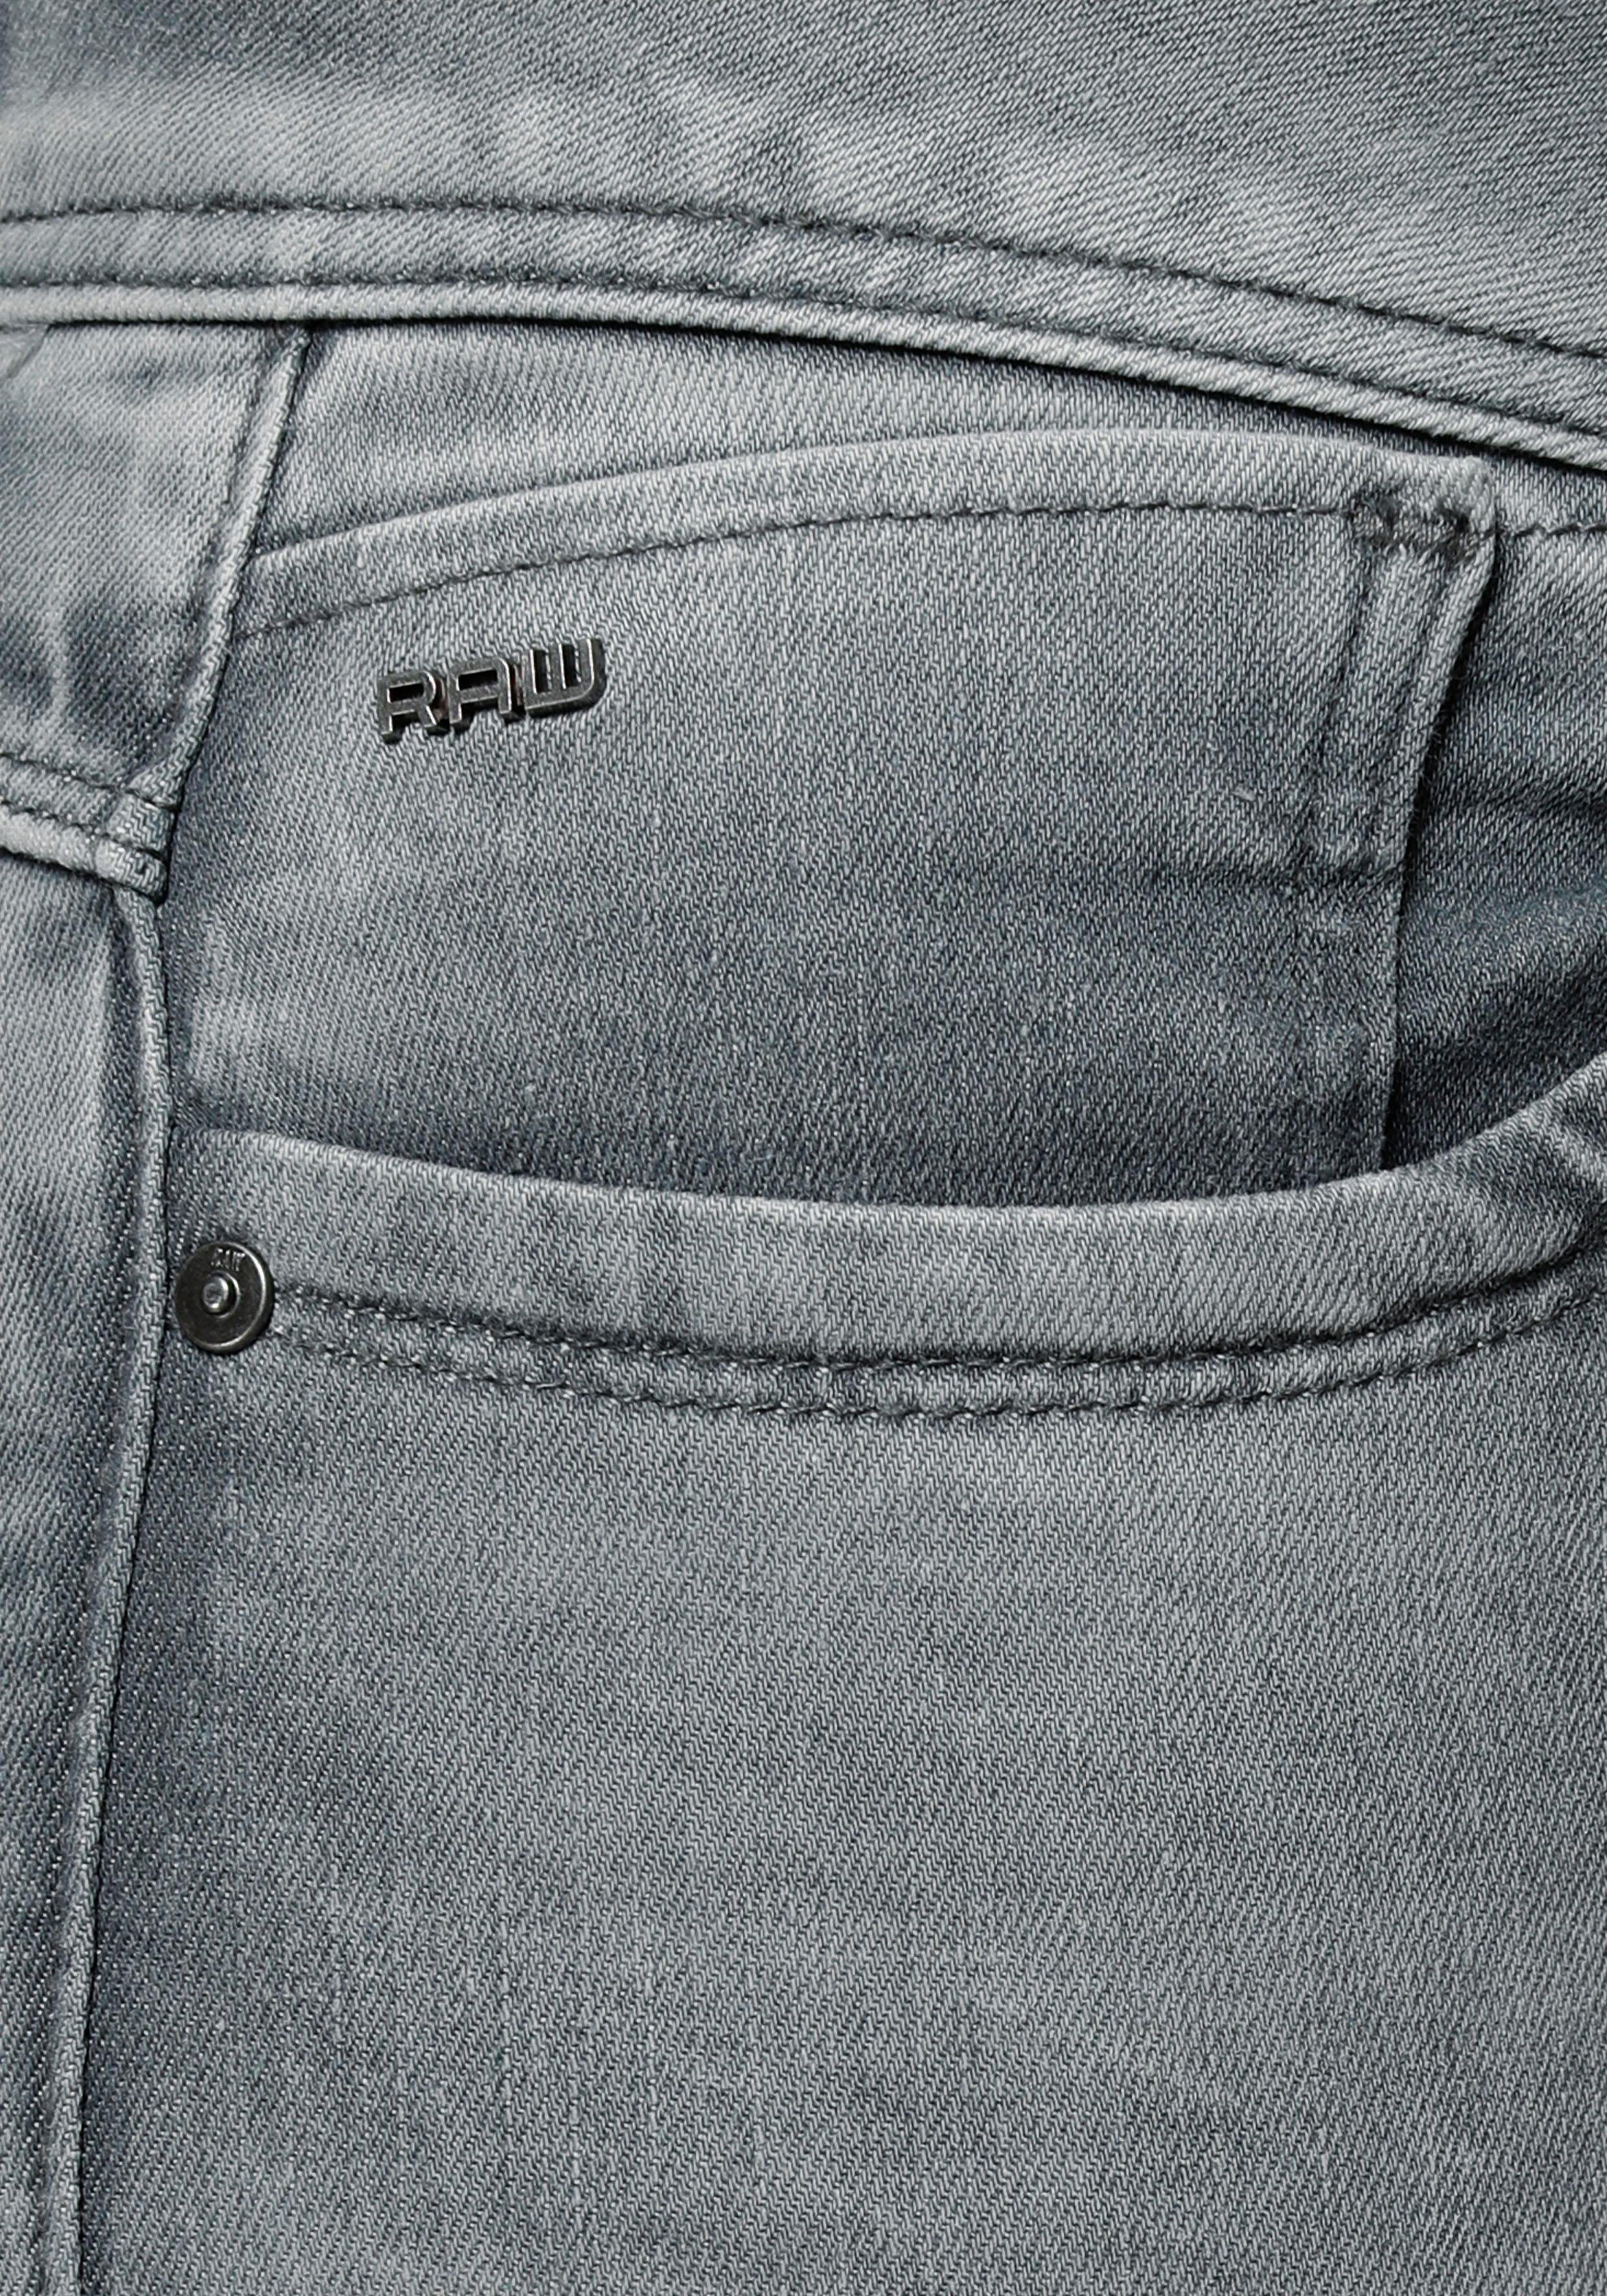 mit Elasthan-Anteil RAW grey Skinny industrial faded Waist Skinny-fit-Jeans G-Star Mid